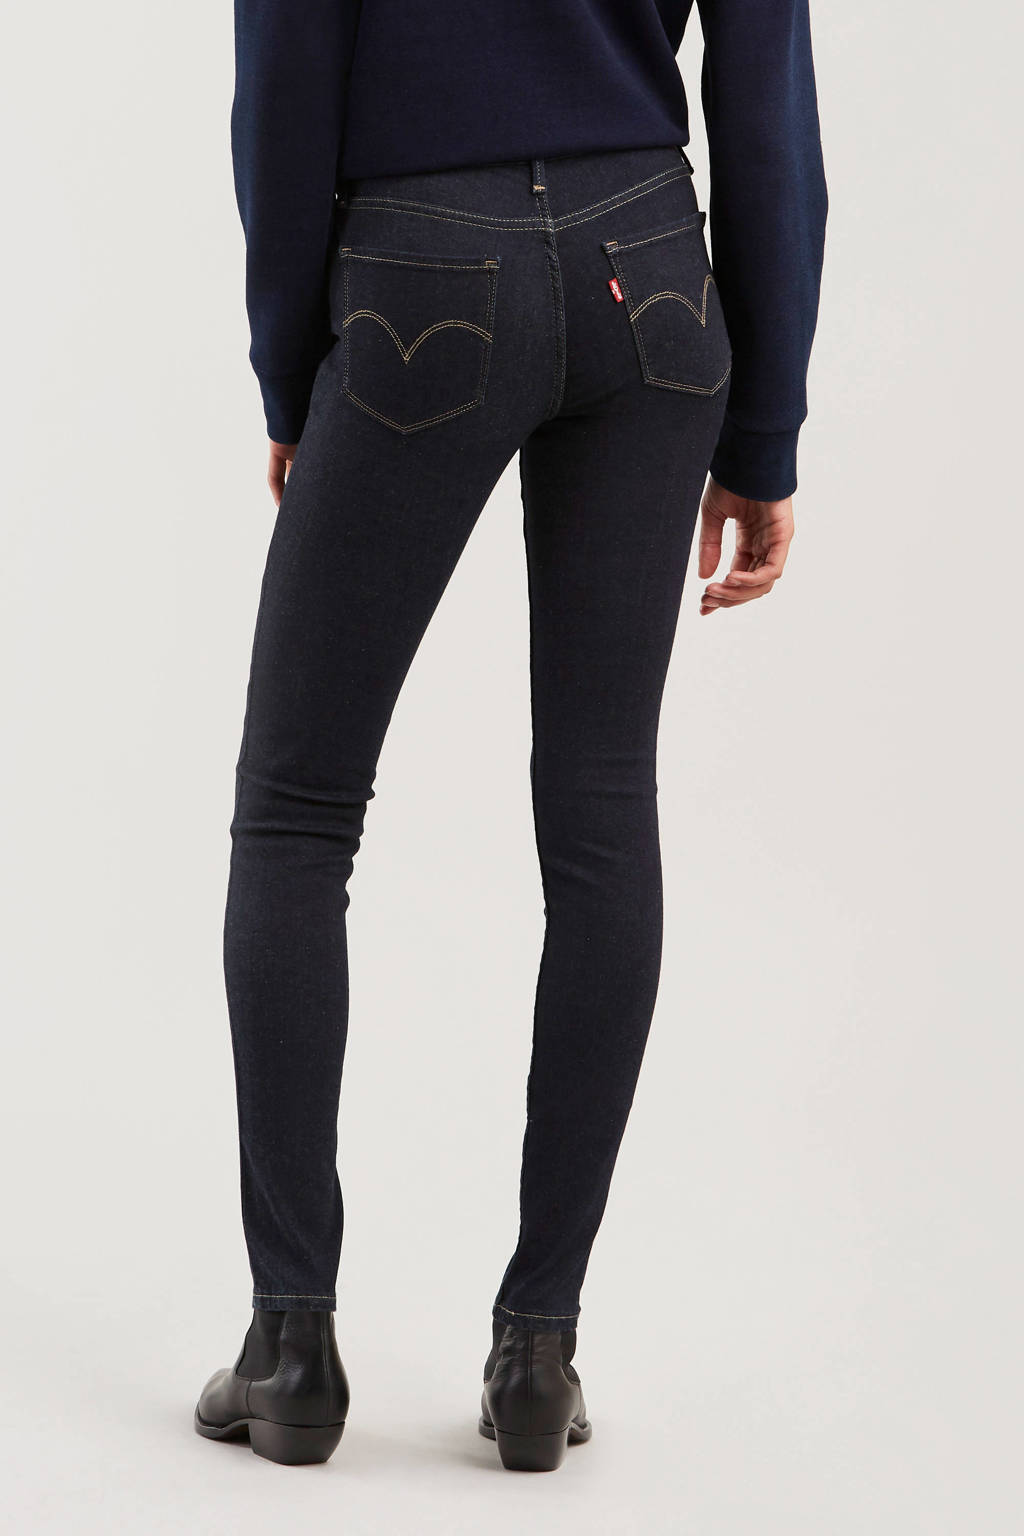 plakband Ellendig Berouw Levi's 710 Innovation super skinny jeans celestial rinse | wehkamp